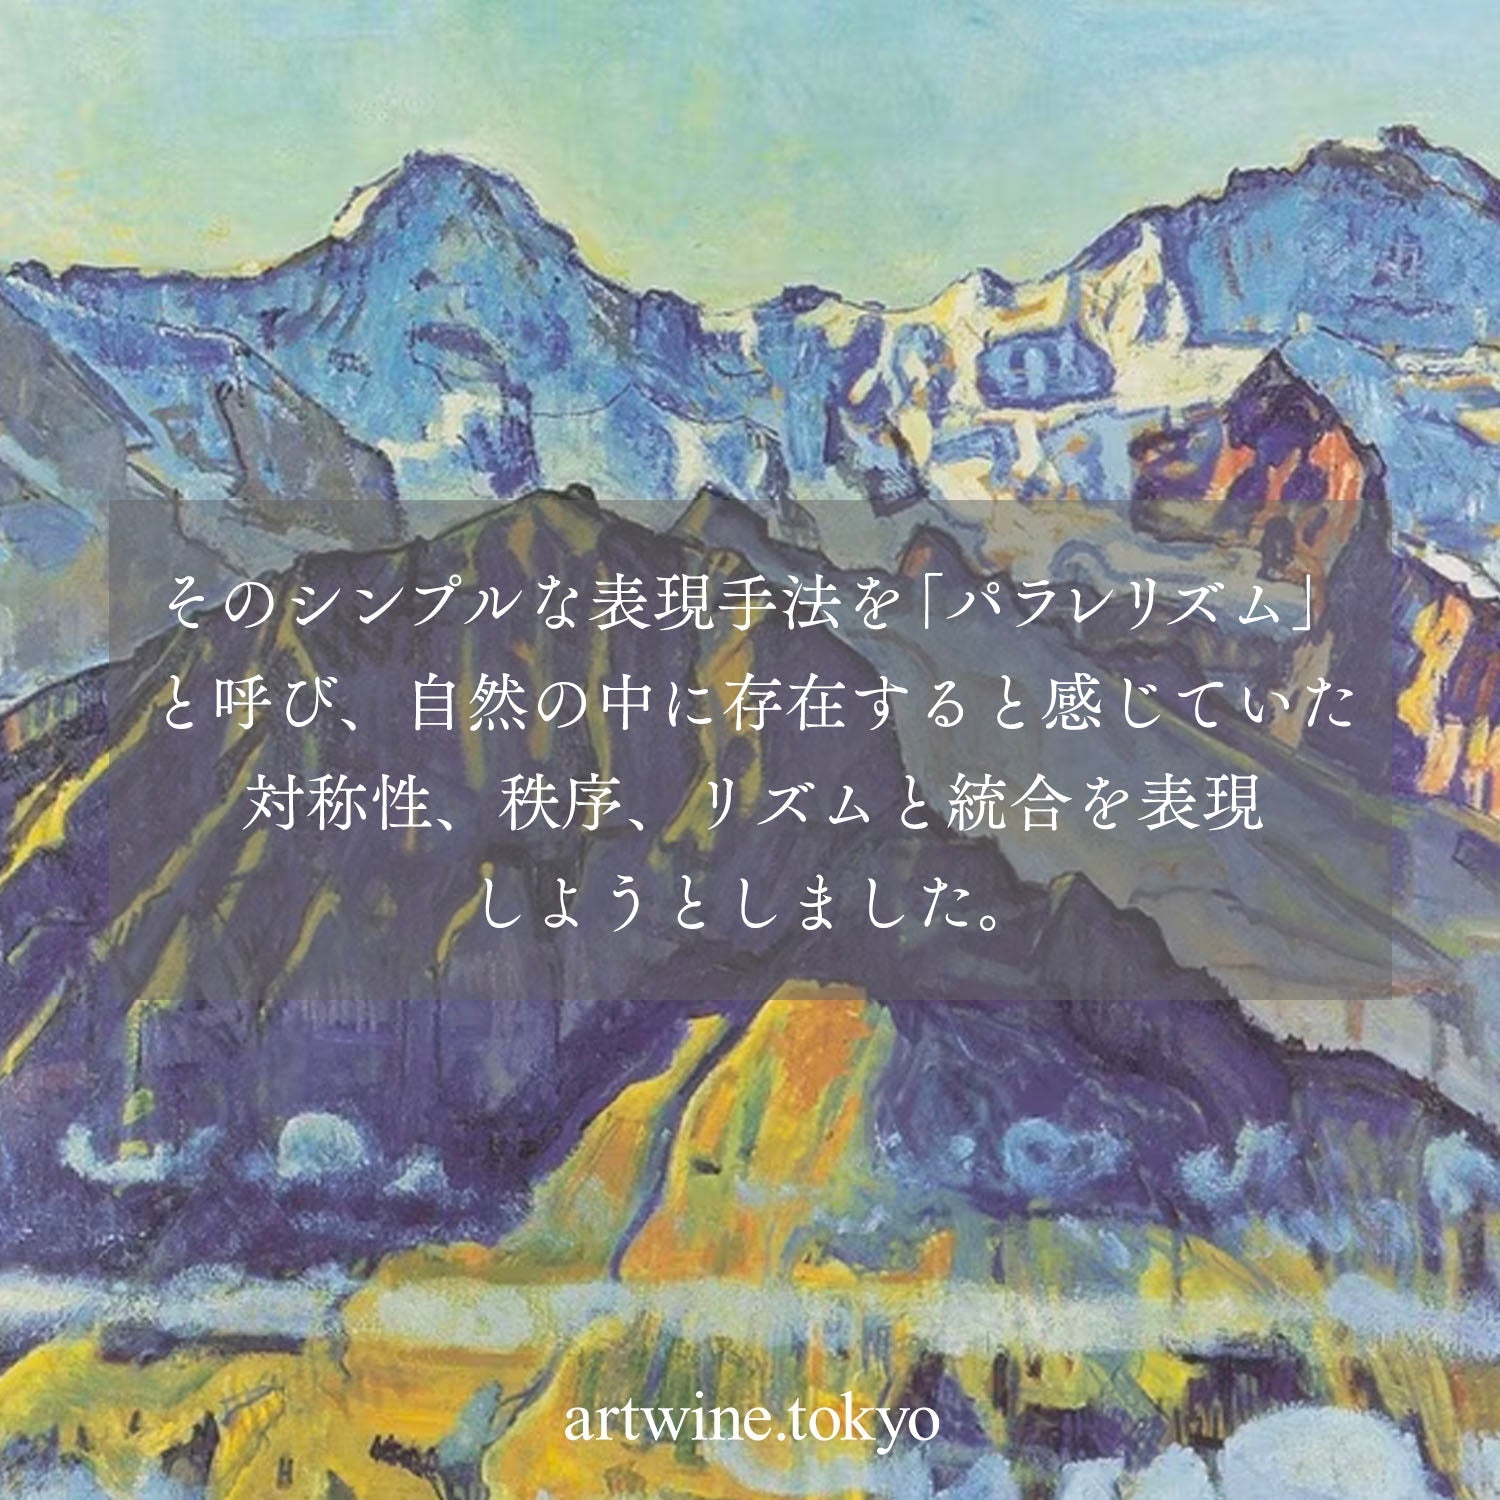 [Ueno/Nezu] December 9th (Sat) 19:30-22:00 | Ferdinand Hodler | "Landscape of Lake Geneva" by Ferdinand Hodler at Ueno/Nezu 